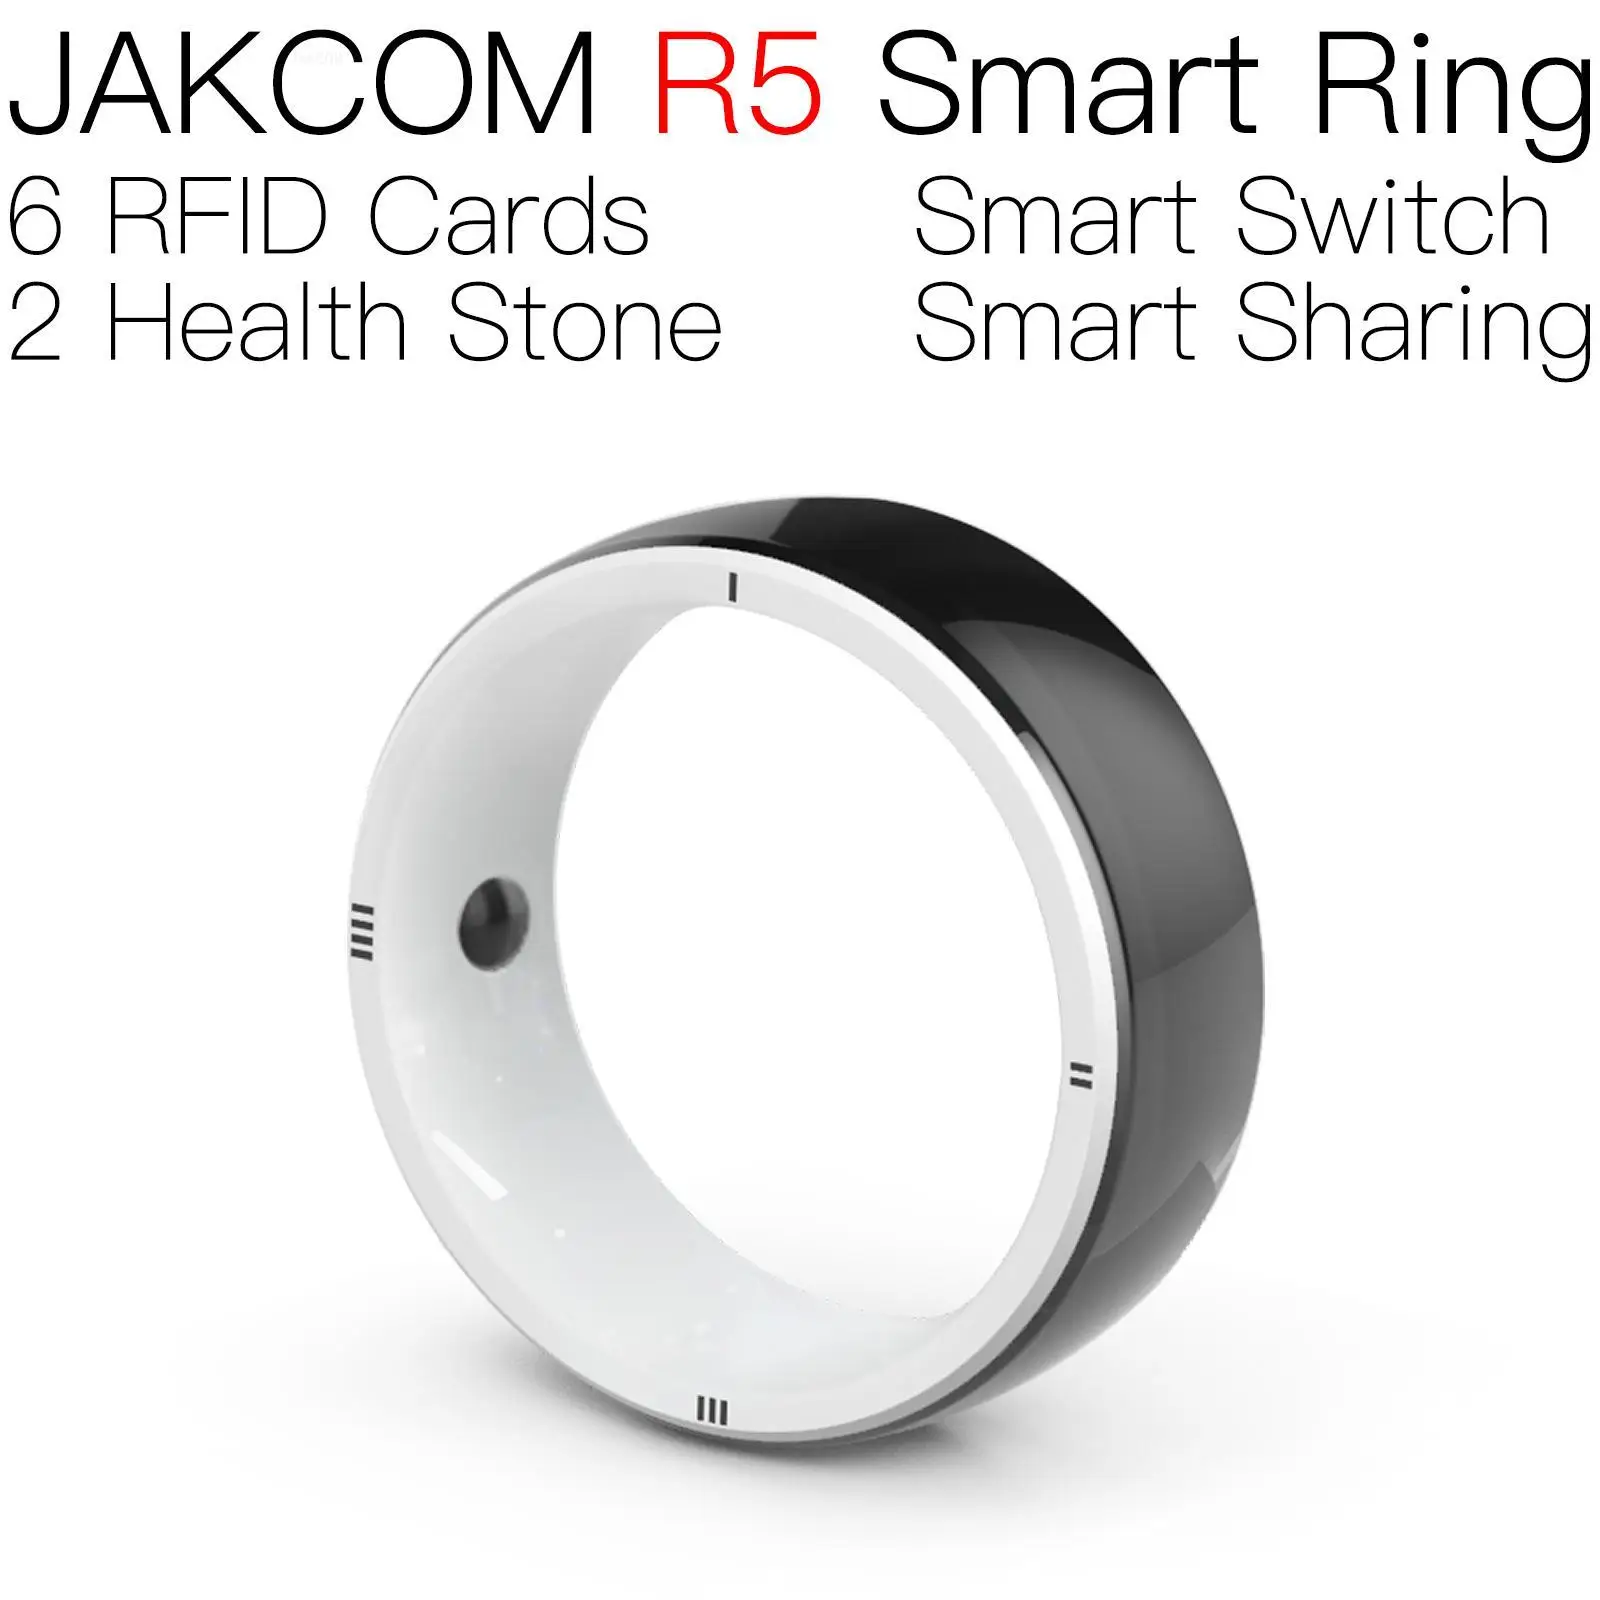 

JAKCOM R5 Smart Ring Nice than tag door rfid rewritable 125mhz us id card nfc hacking ashable tags ntag216 chip implant inlay